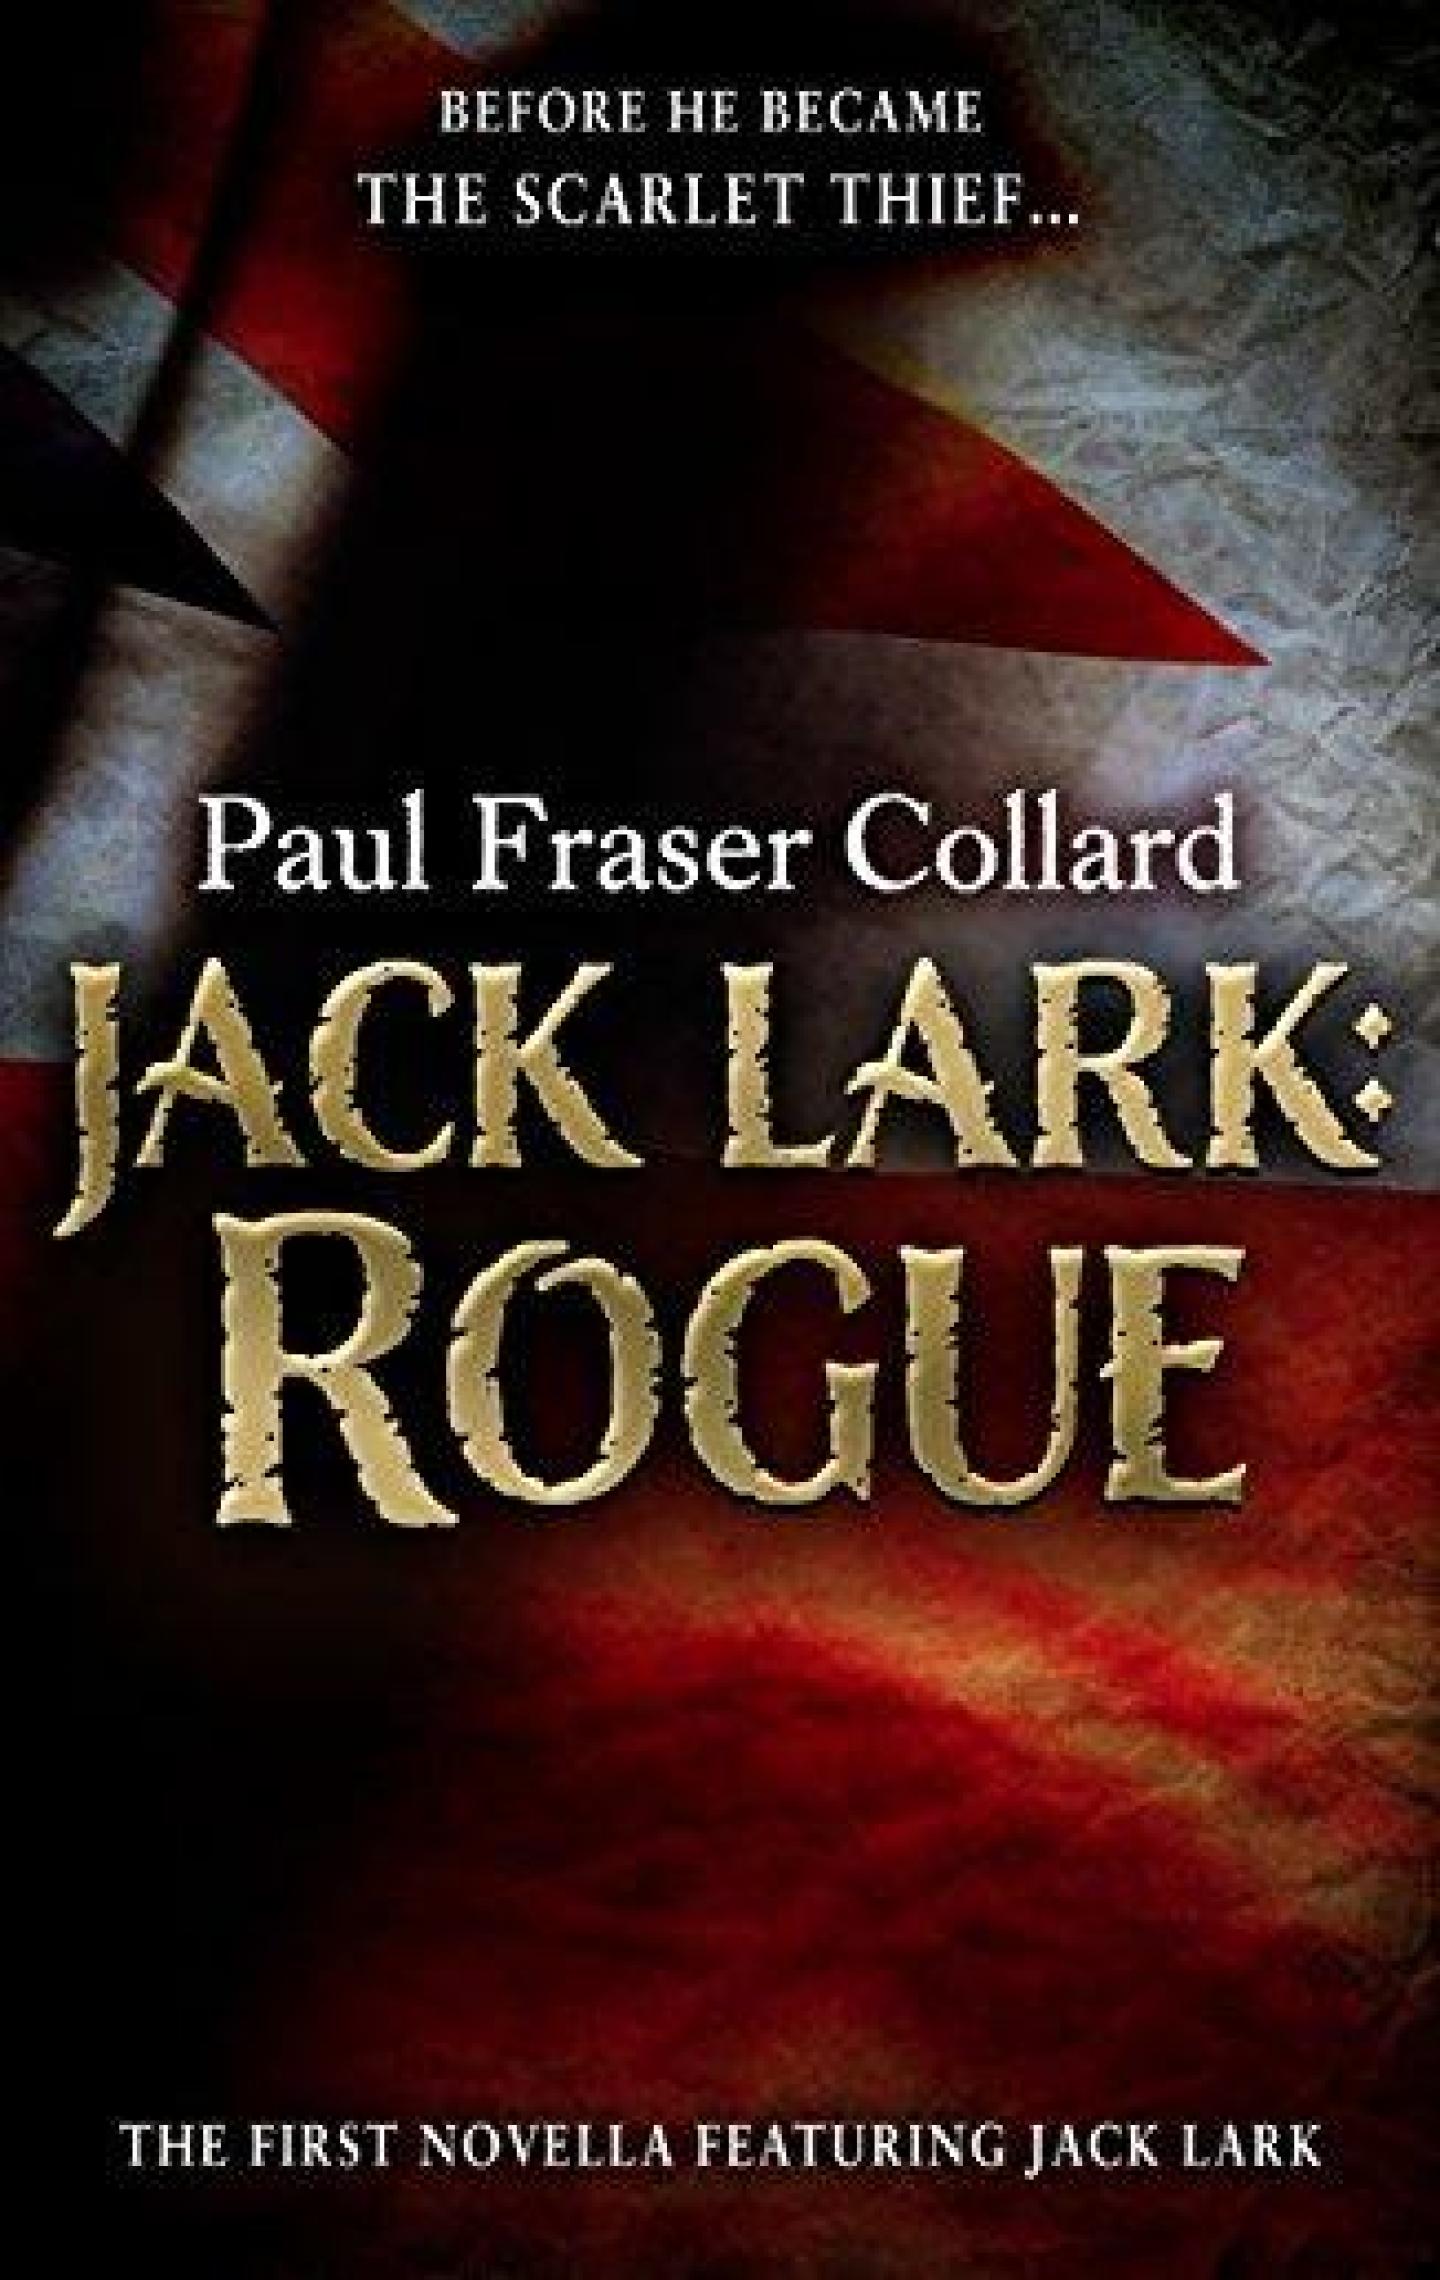 Jack Lark: Rogue